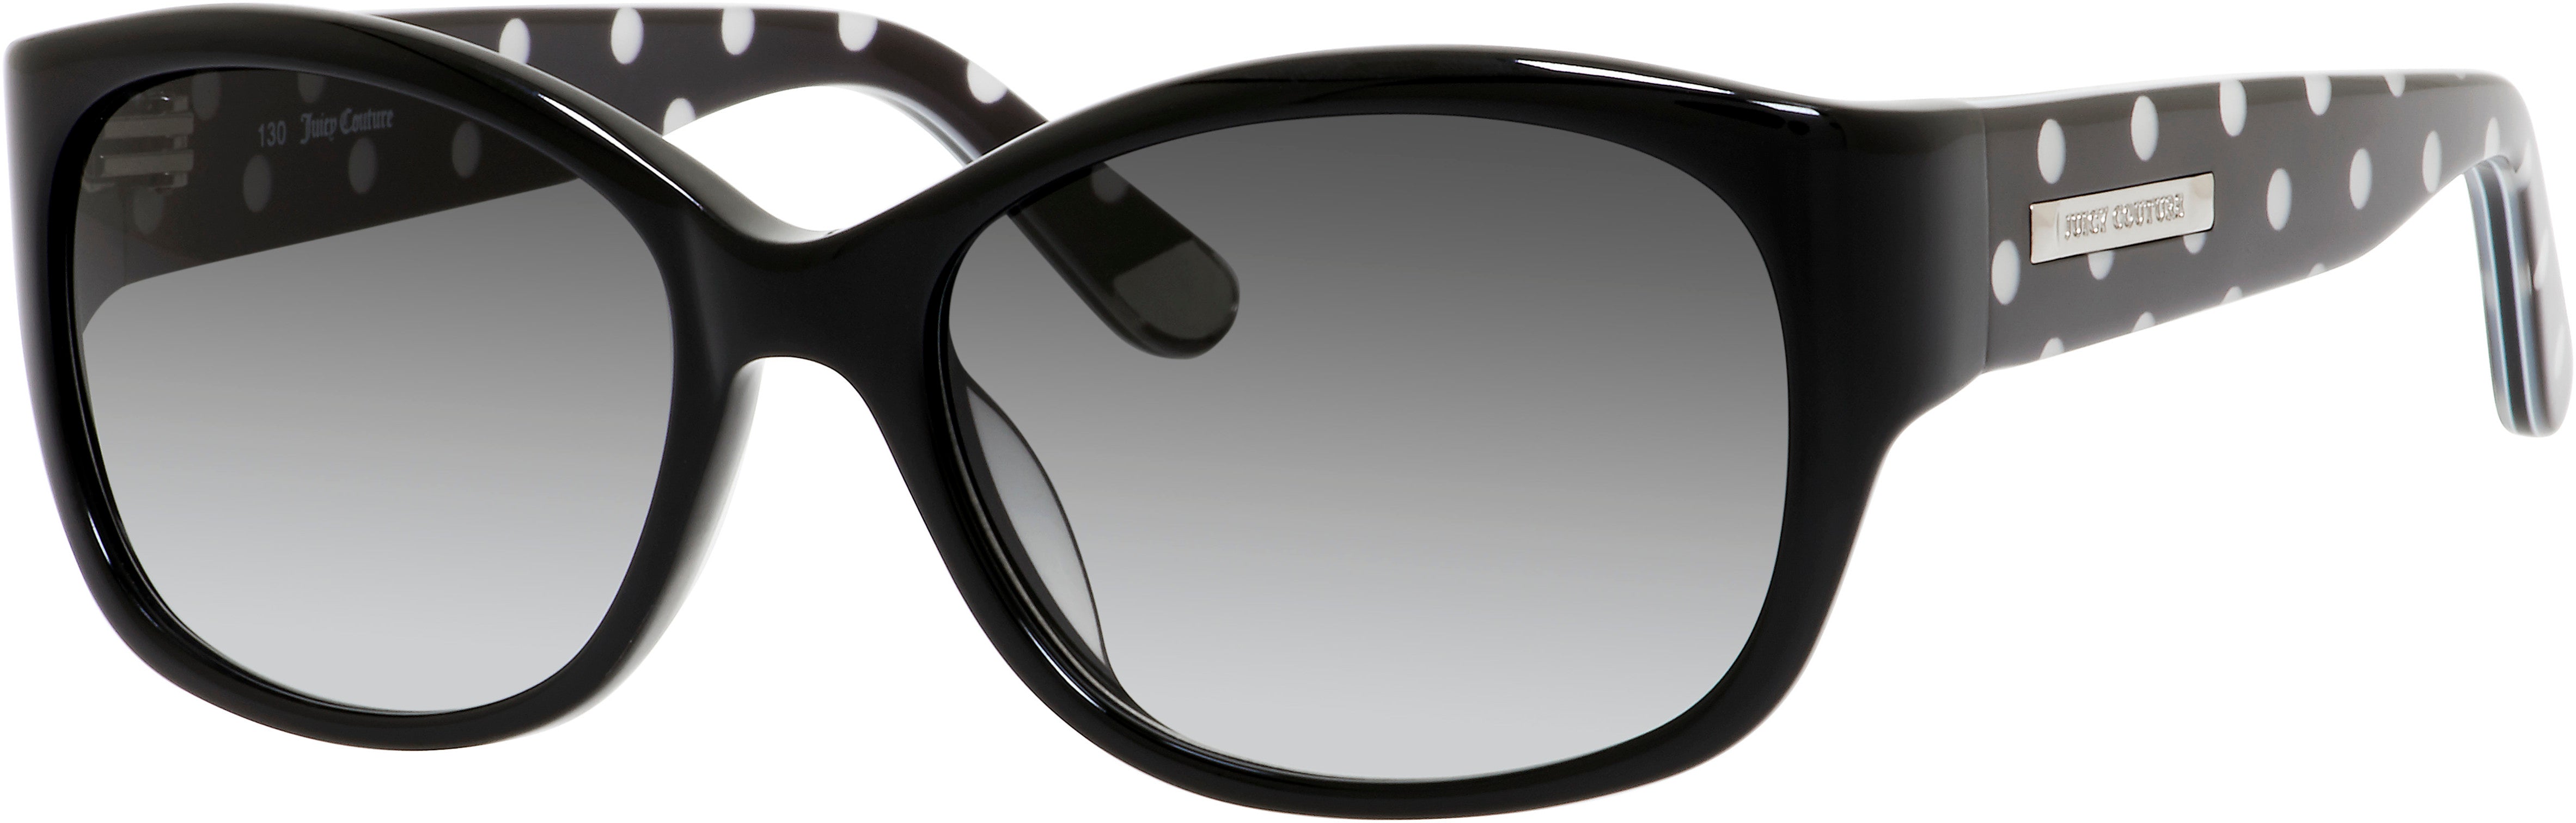 Juicy Couture Juicy 551/S Rectangular Sunglasses 0RE8-0RE8  Black Polka Dot (Y7 Gray Gradient)